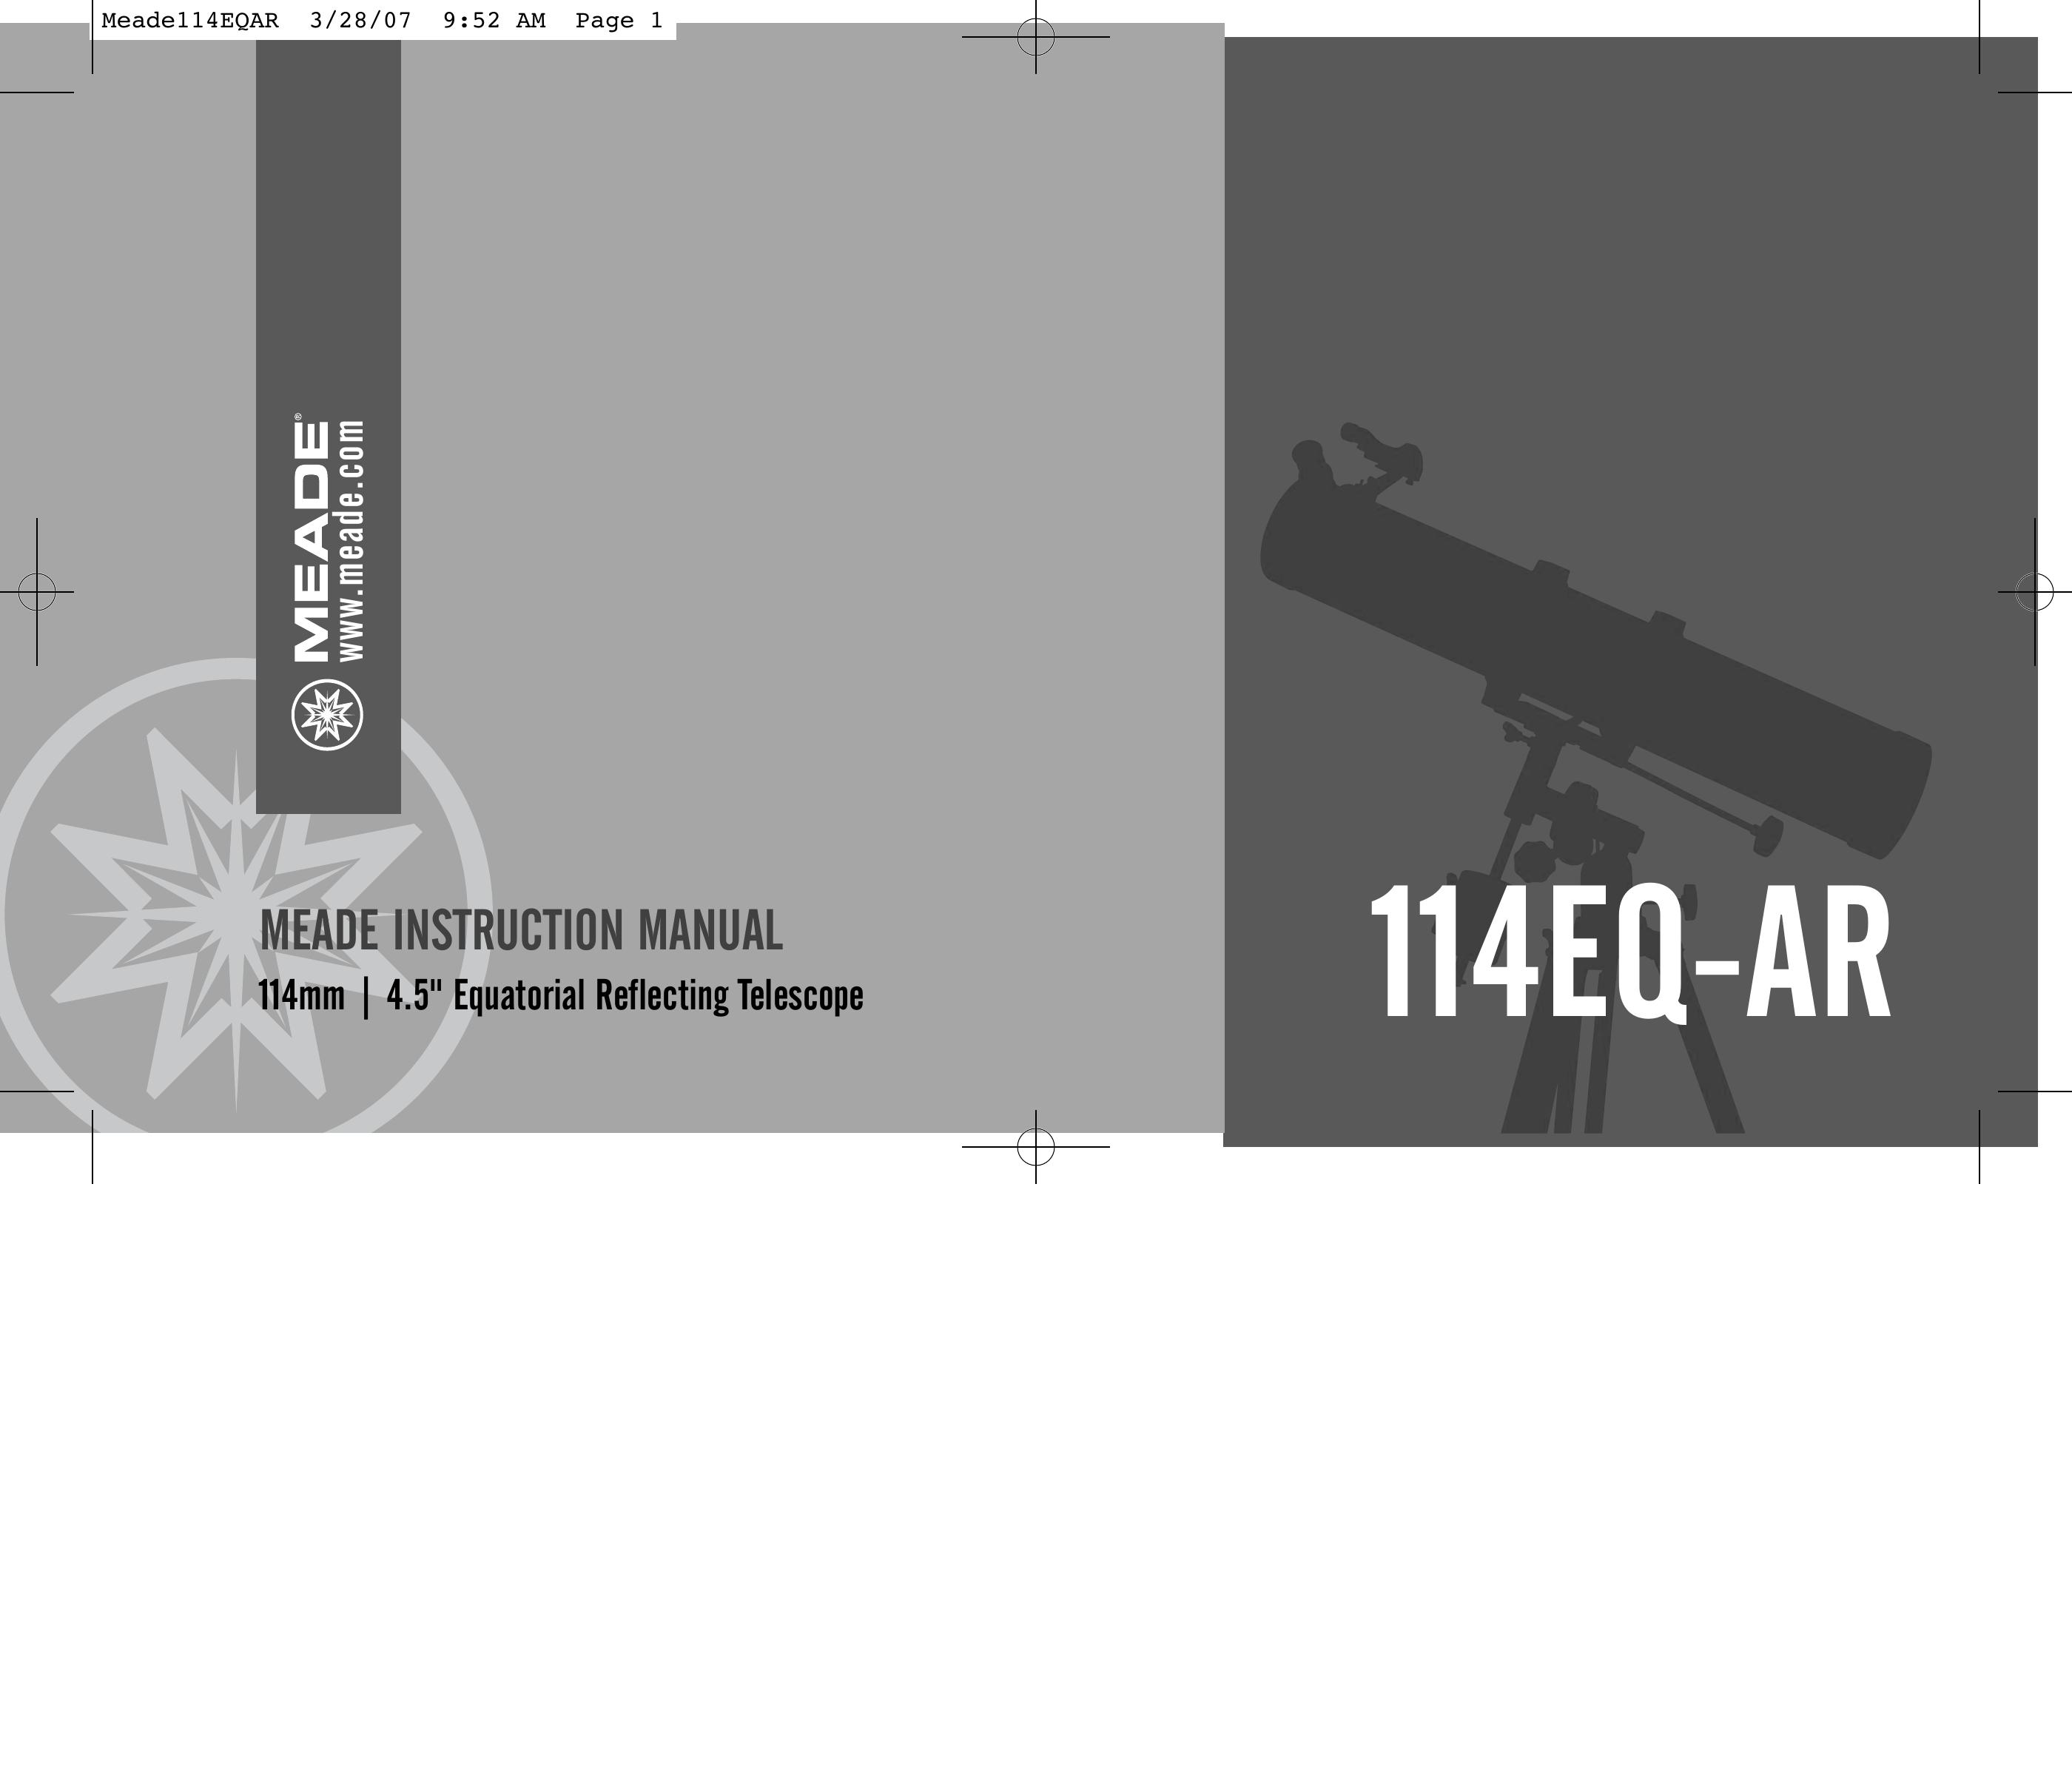 Meade 114EQ-AR Telescope User Manual